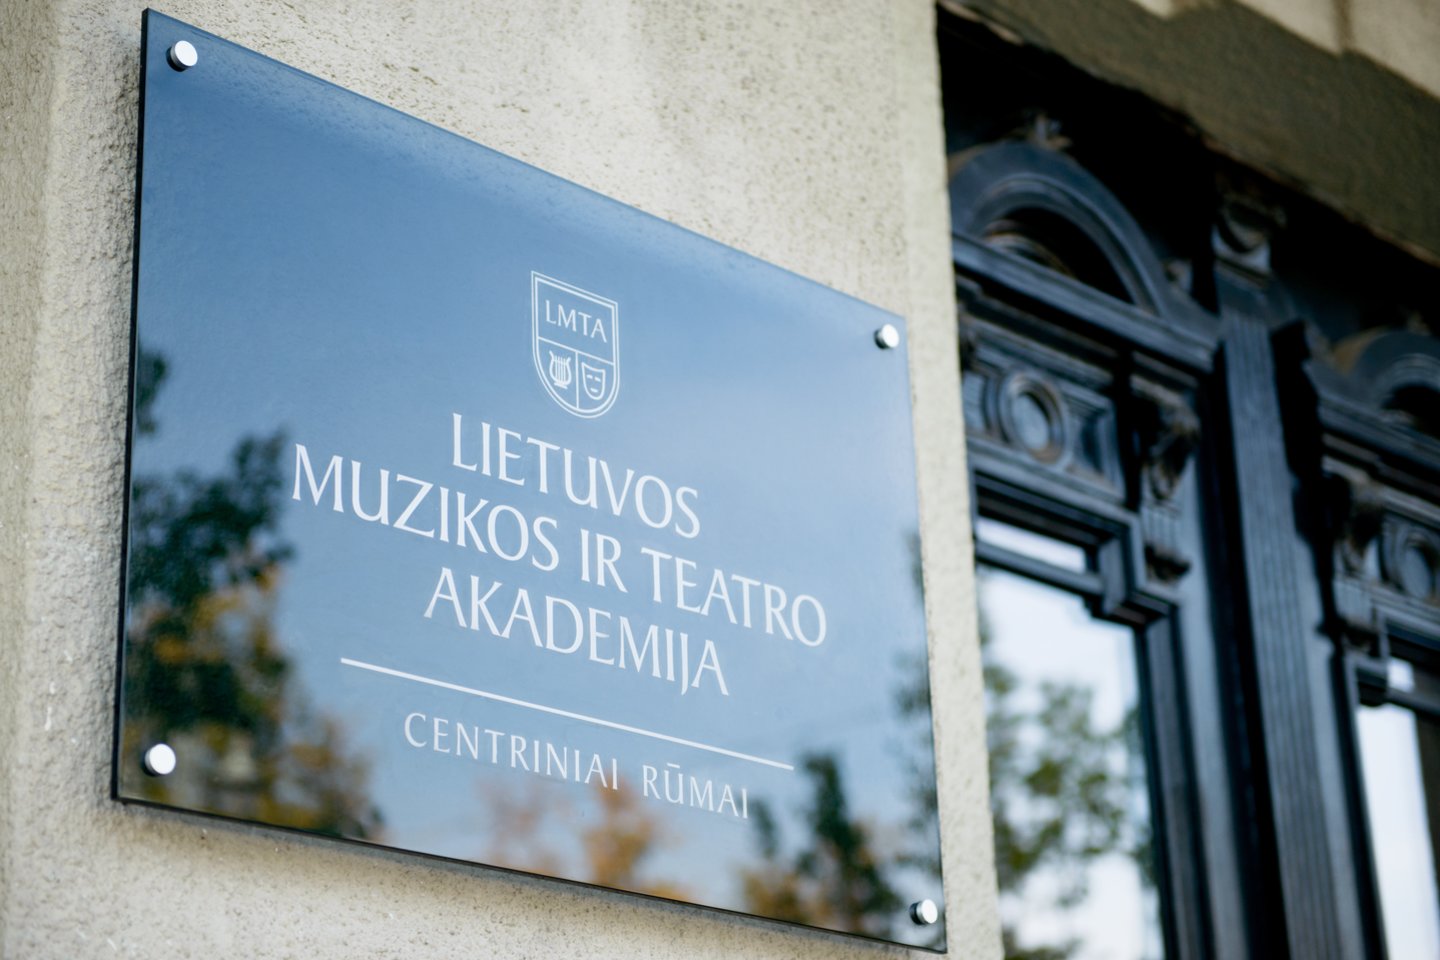 LMTA&lt; lietuvos muzikos ir teatro akademija, ženklas<br>J.Stacevičiaus nuotr.